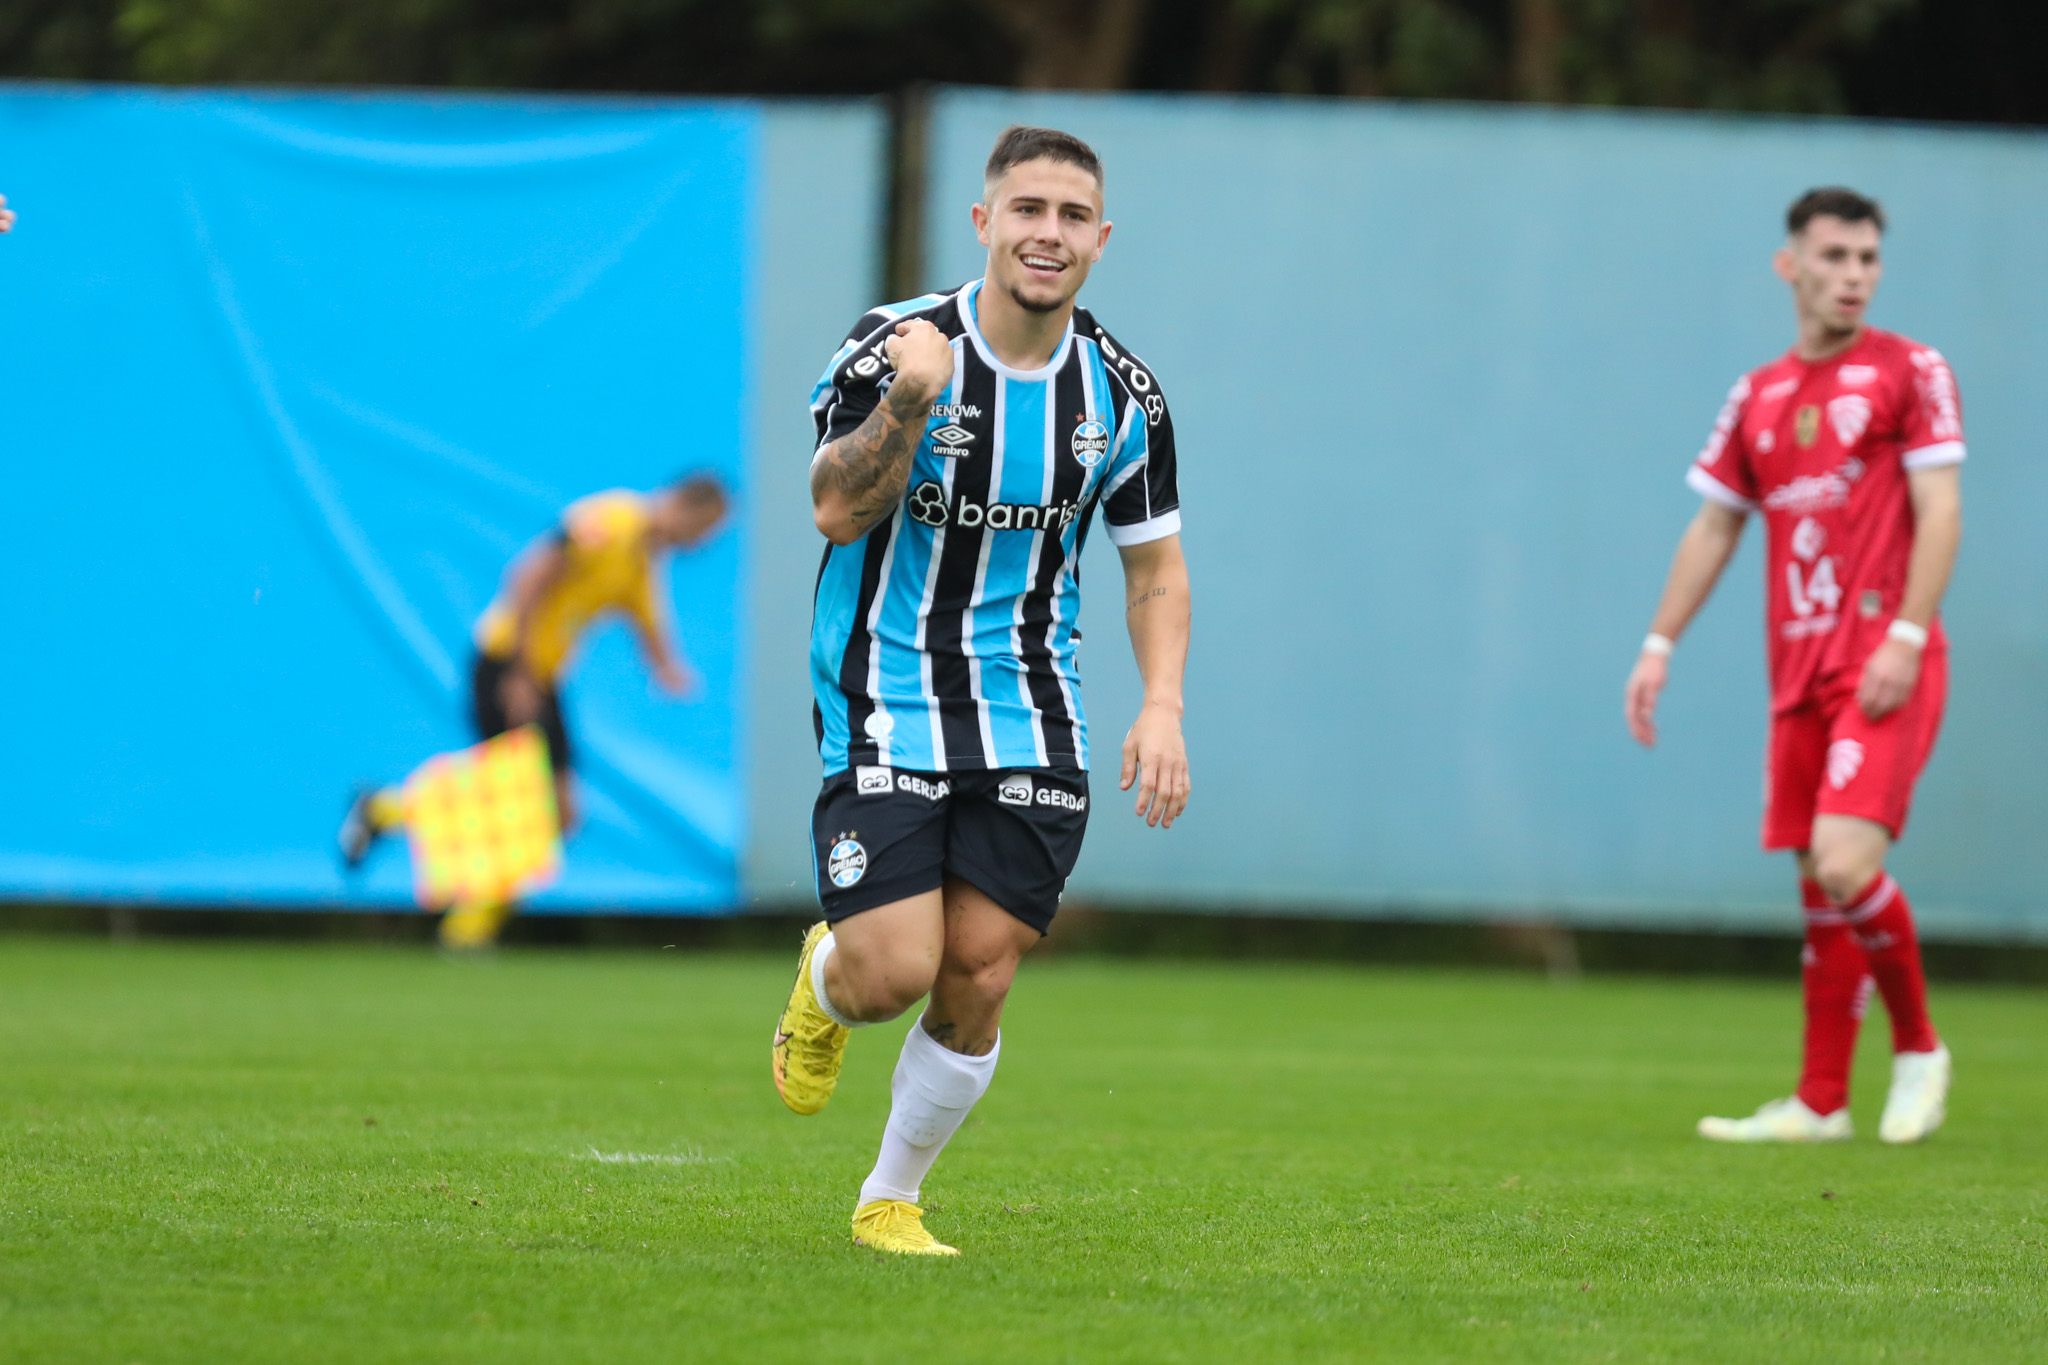 Rubens celebra gol pelo Grêmio (Foto: Rodrigo Fatturi/Grêmio)